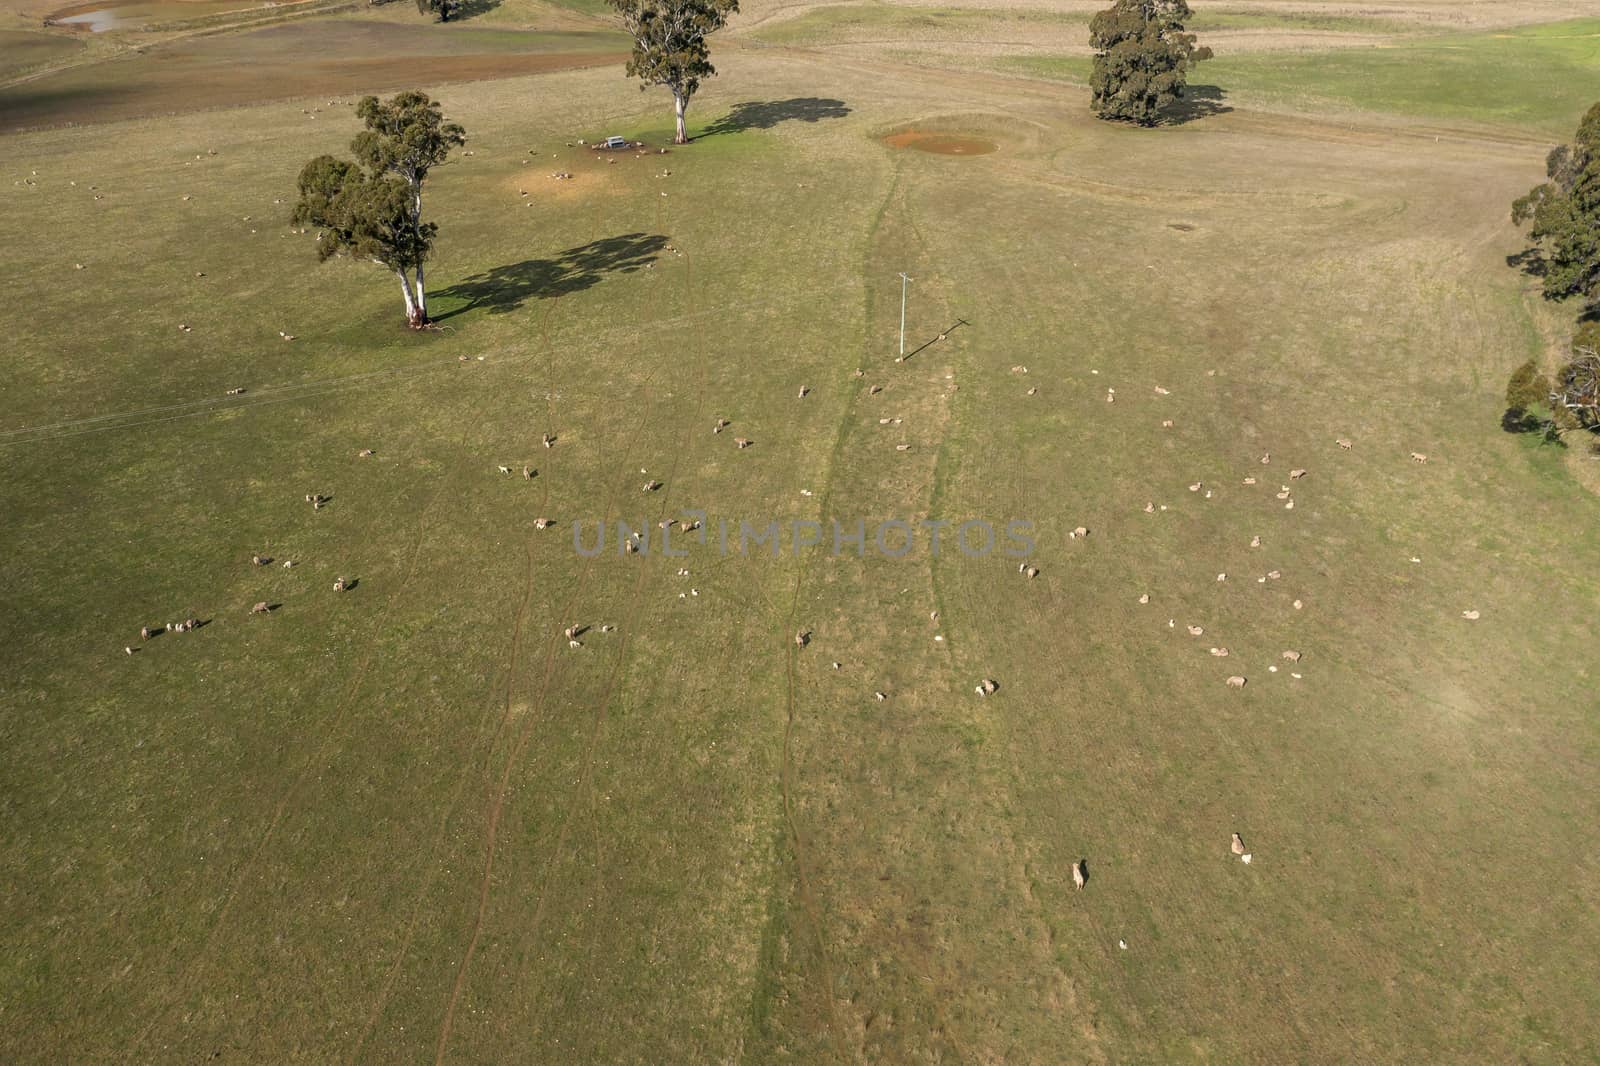 Sheep in a lush farming field in regional Australia by WittkePhotos